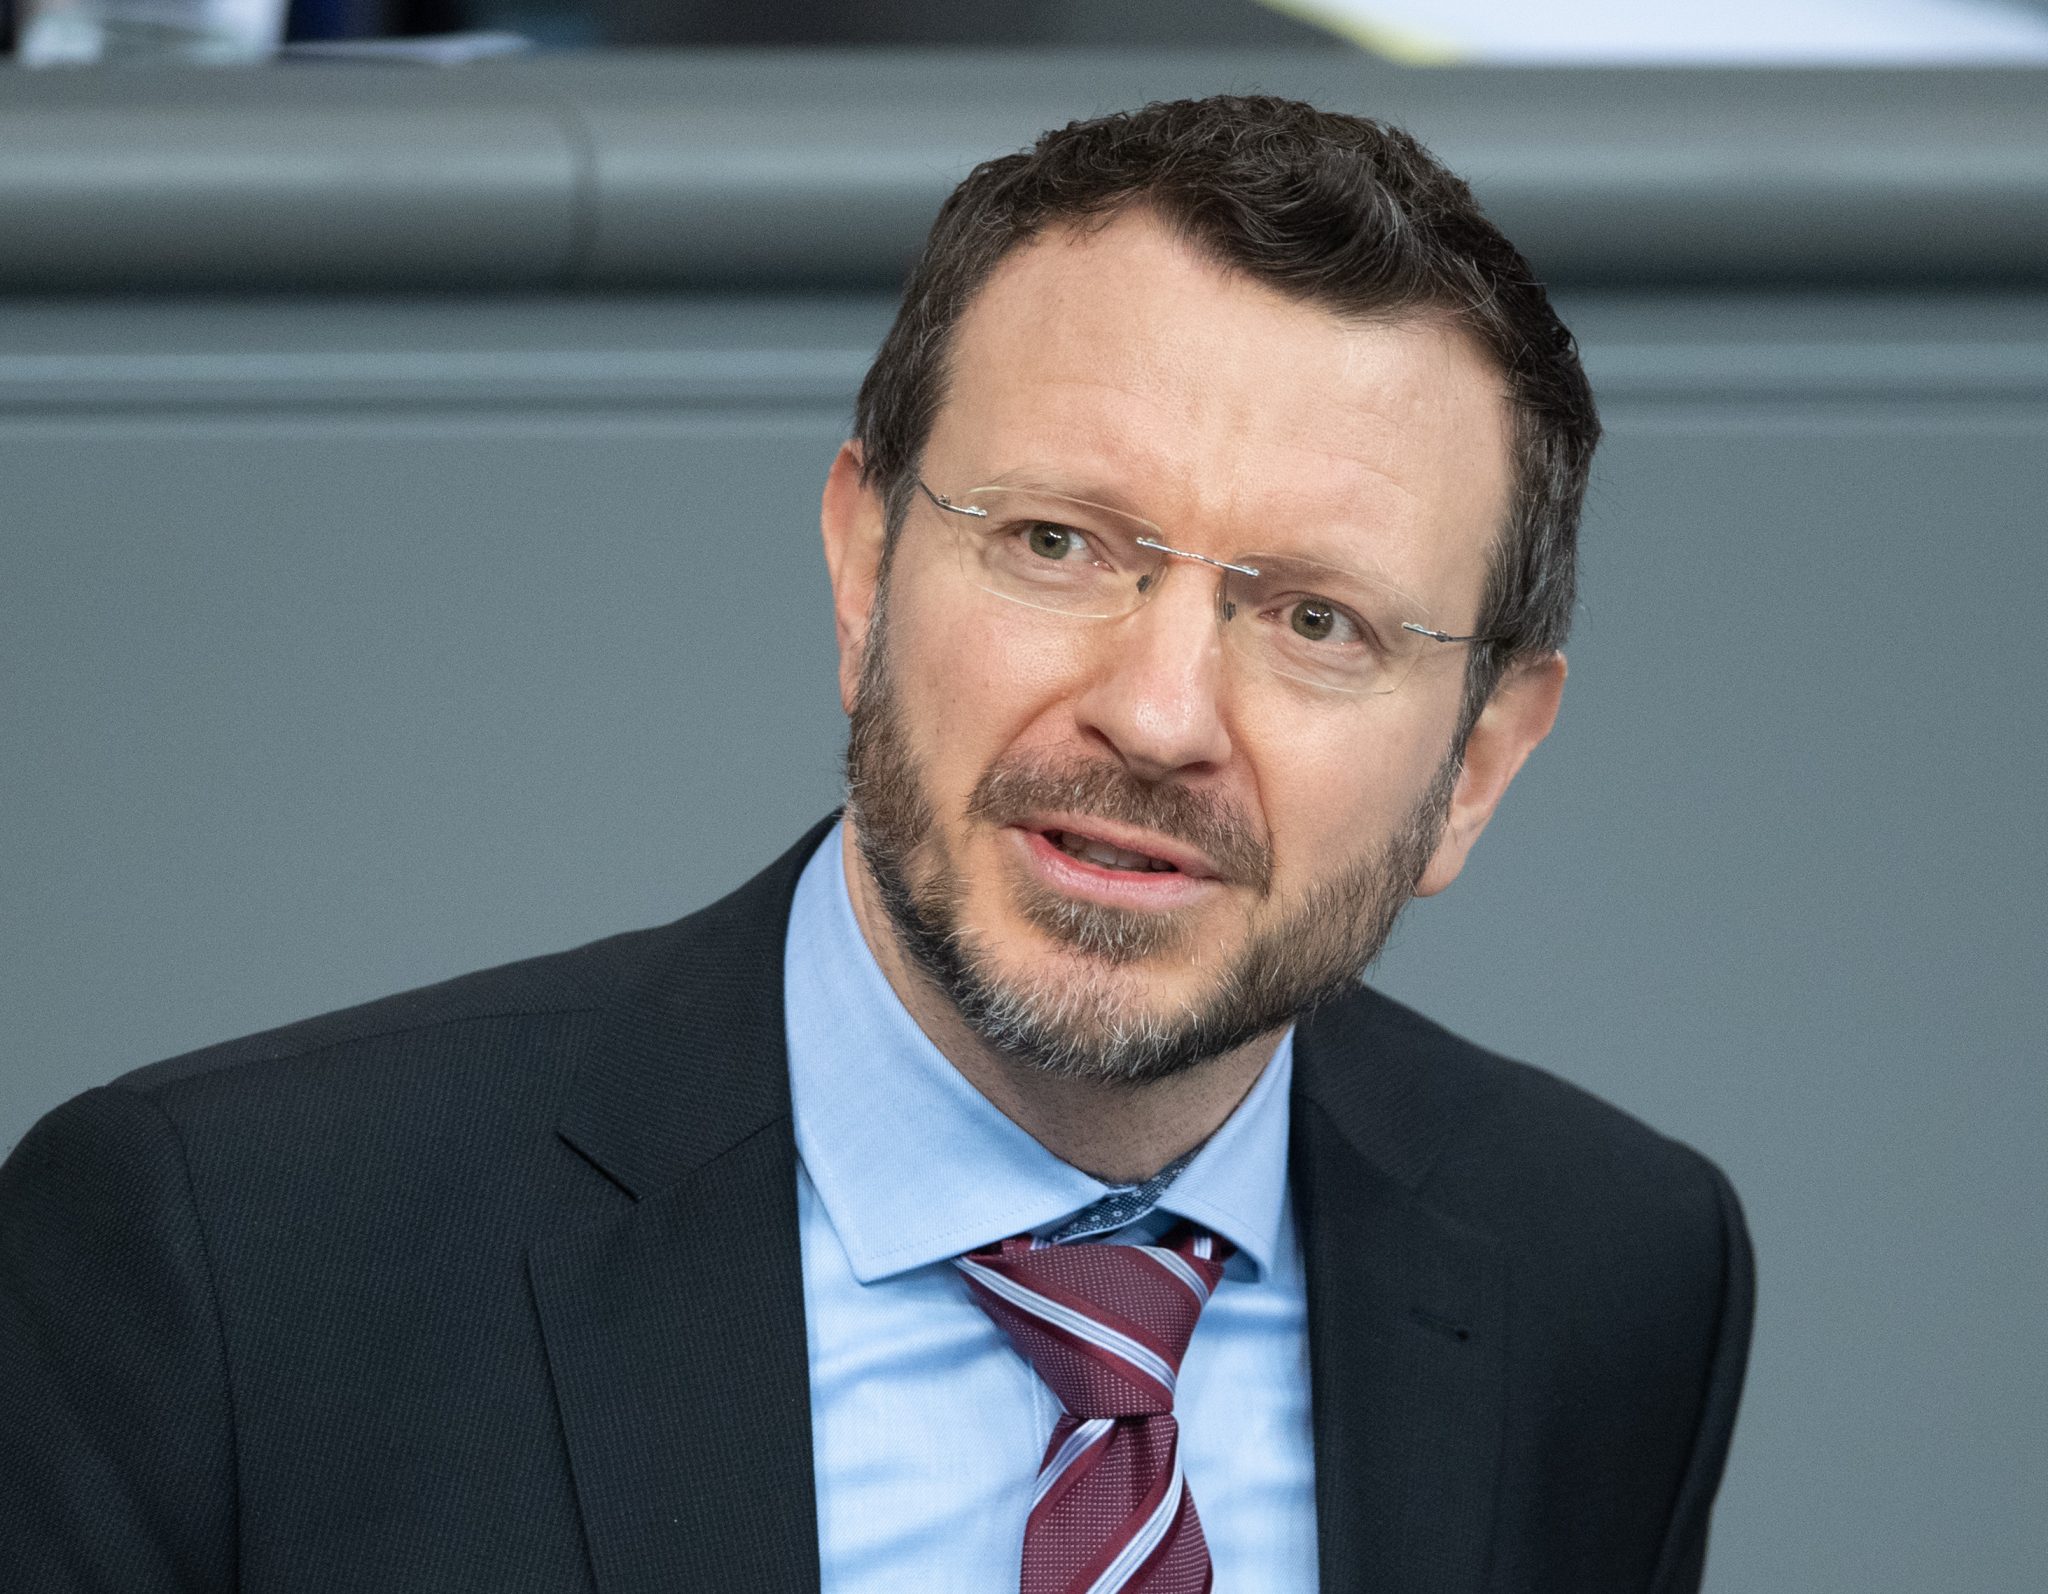 Jan-Marco Luczak (CDU)